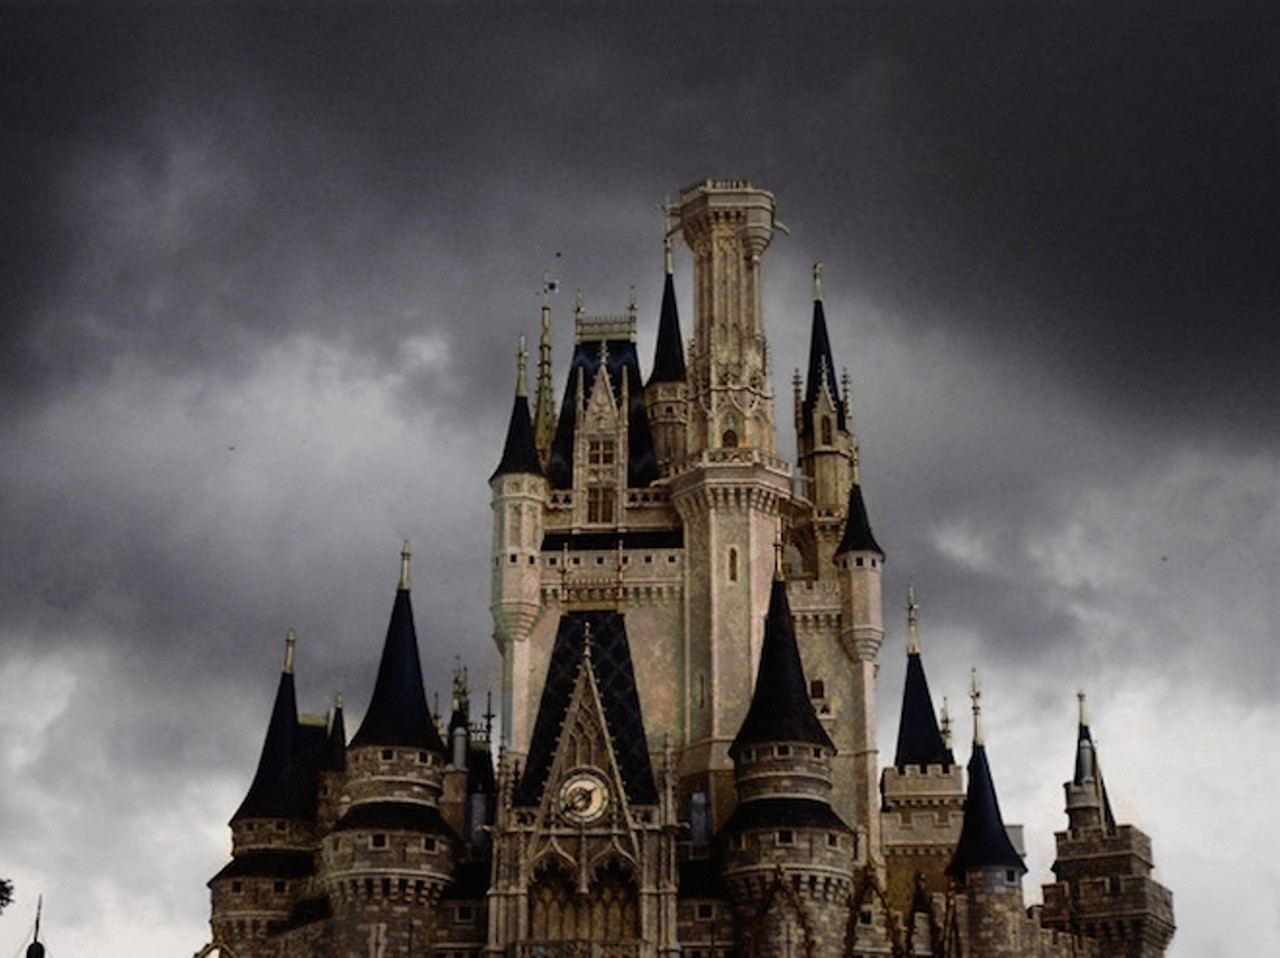 A closer view of Cinderella's Castle